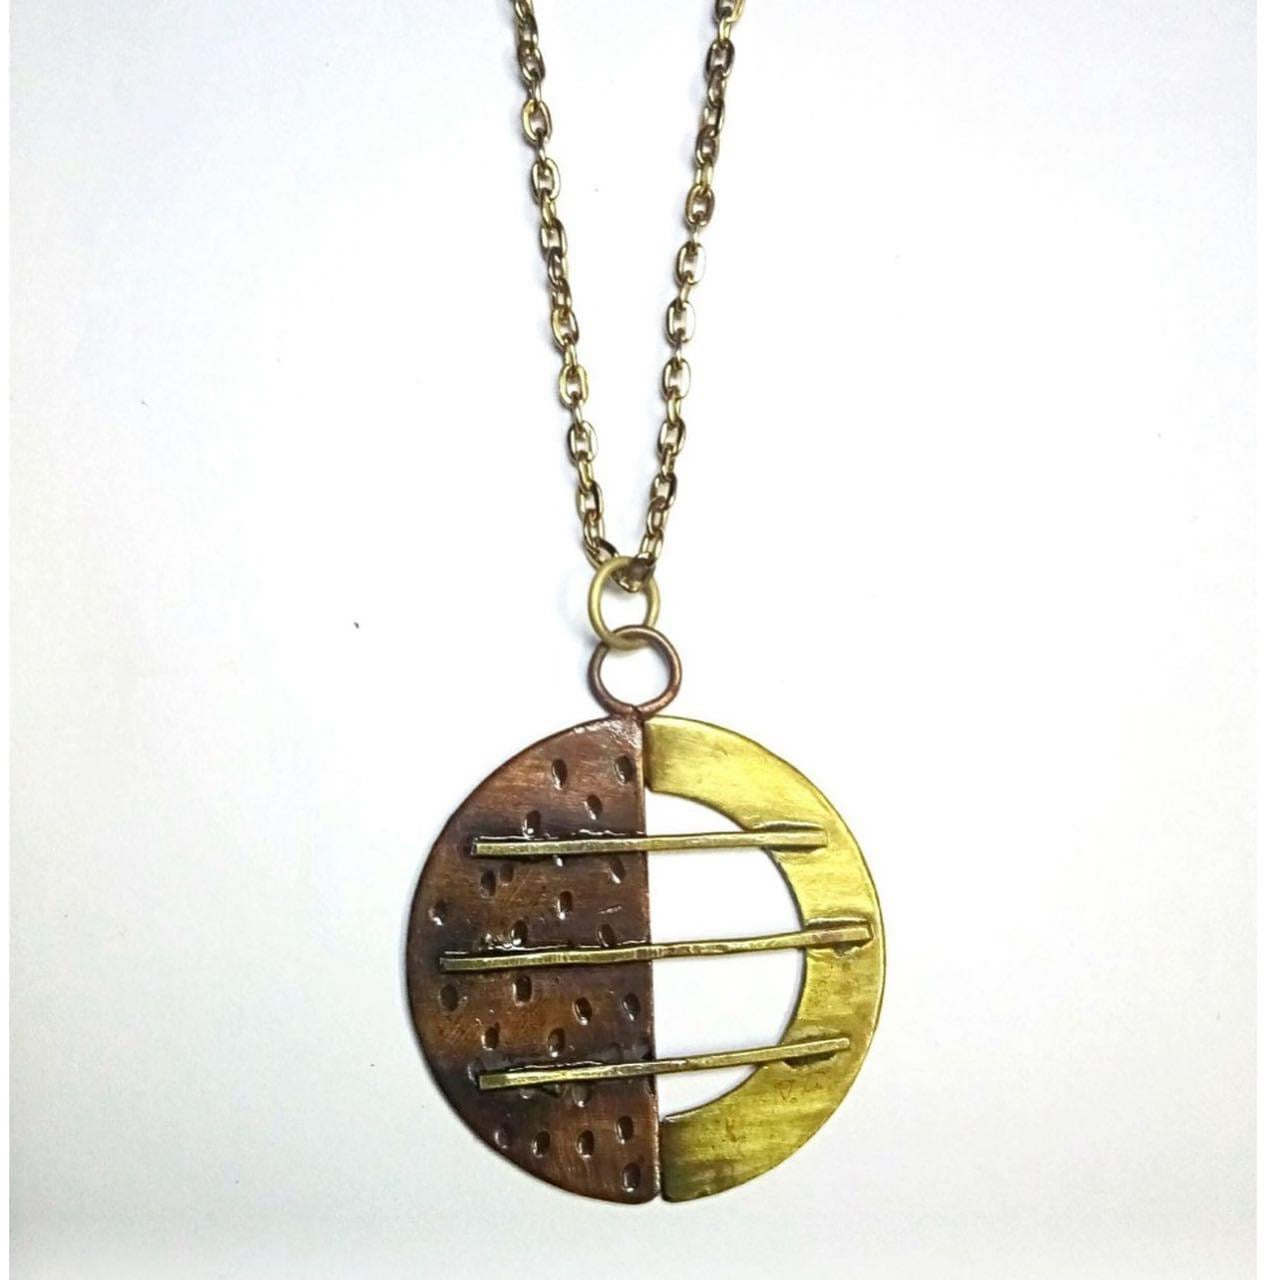 Copper and brass round pendant neckpiece